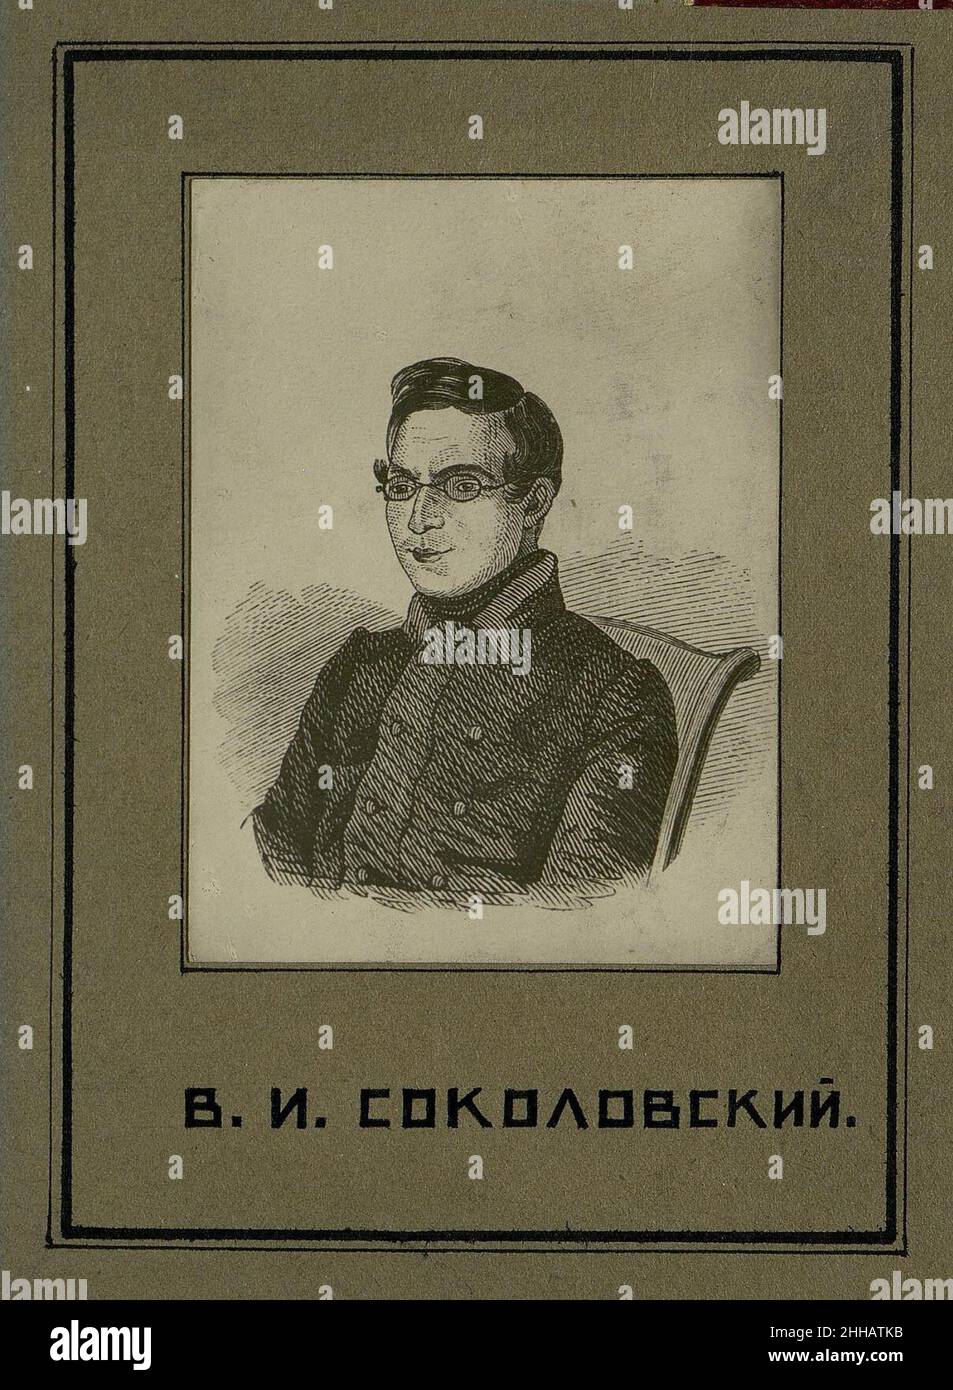 Sokolovskii Vladimir Ivanovich. Foto Stock